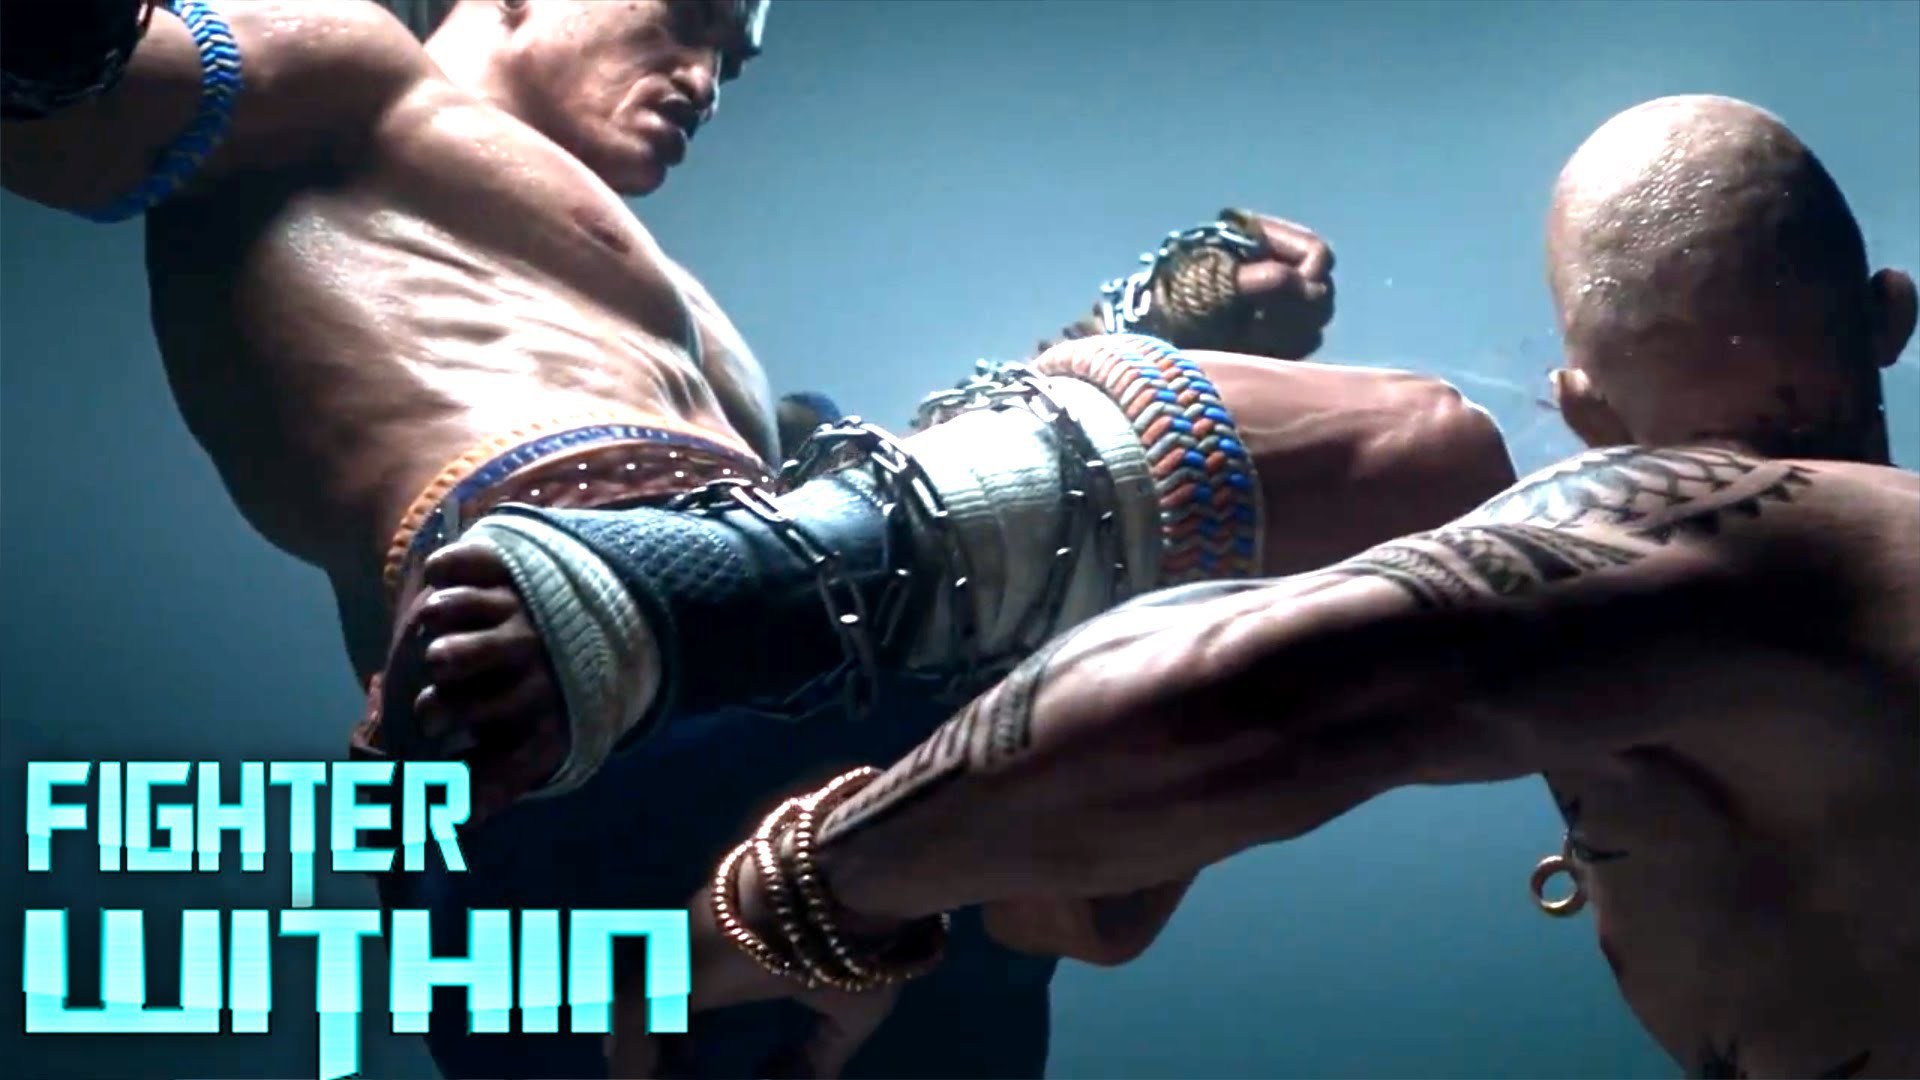 Fighter Within игра эксклюзив для Xbox One